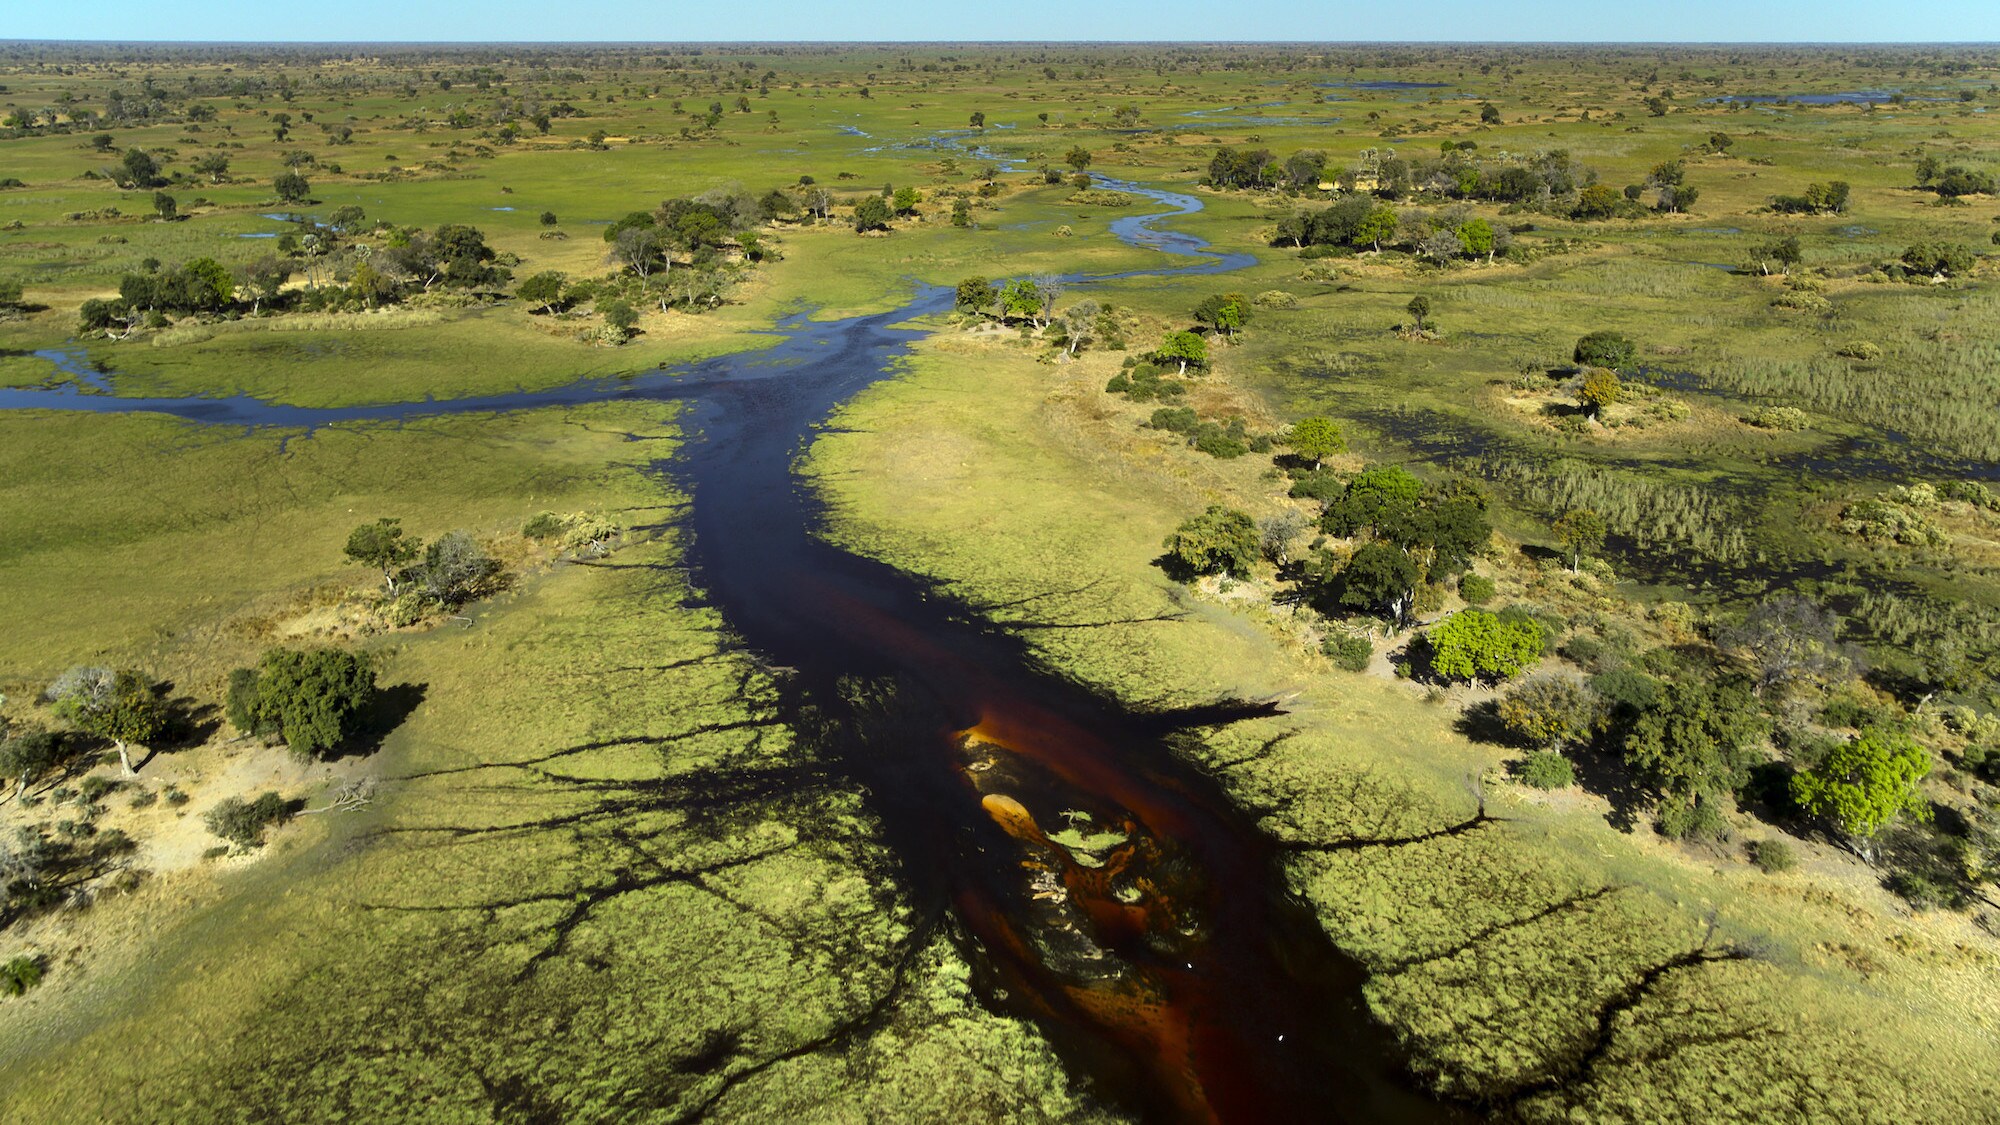 Aerial shot of Okavango delta, rivers and grasslands. (National Geographic for Disney+/Bertie Gregory)